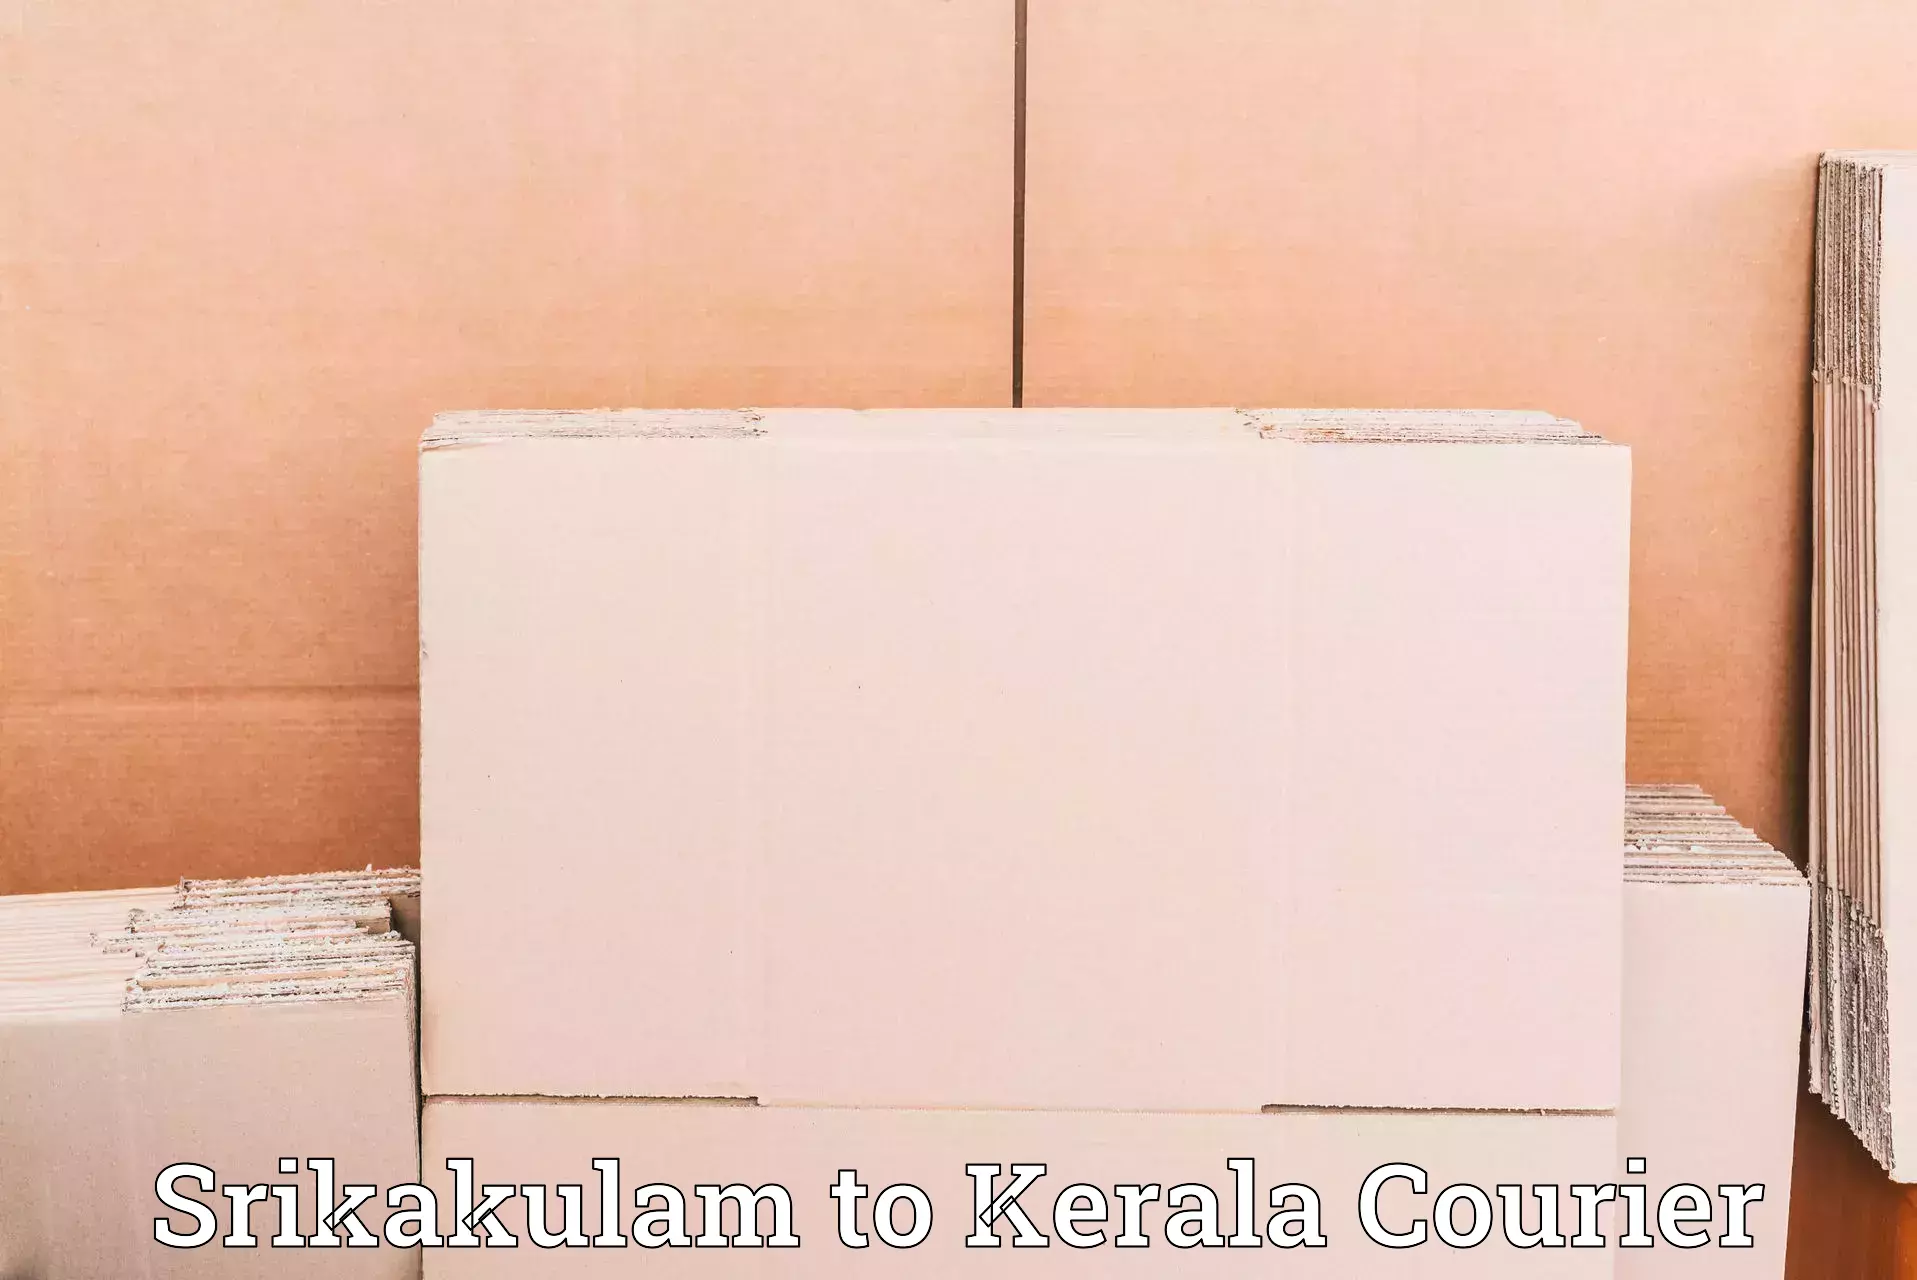 Courier service comparison Srikakulam to Kannur